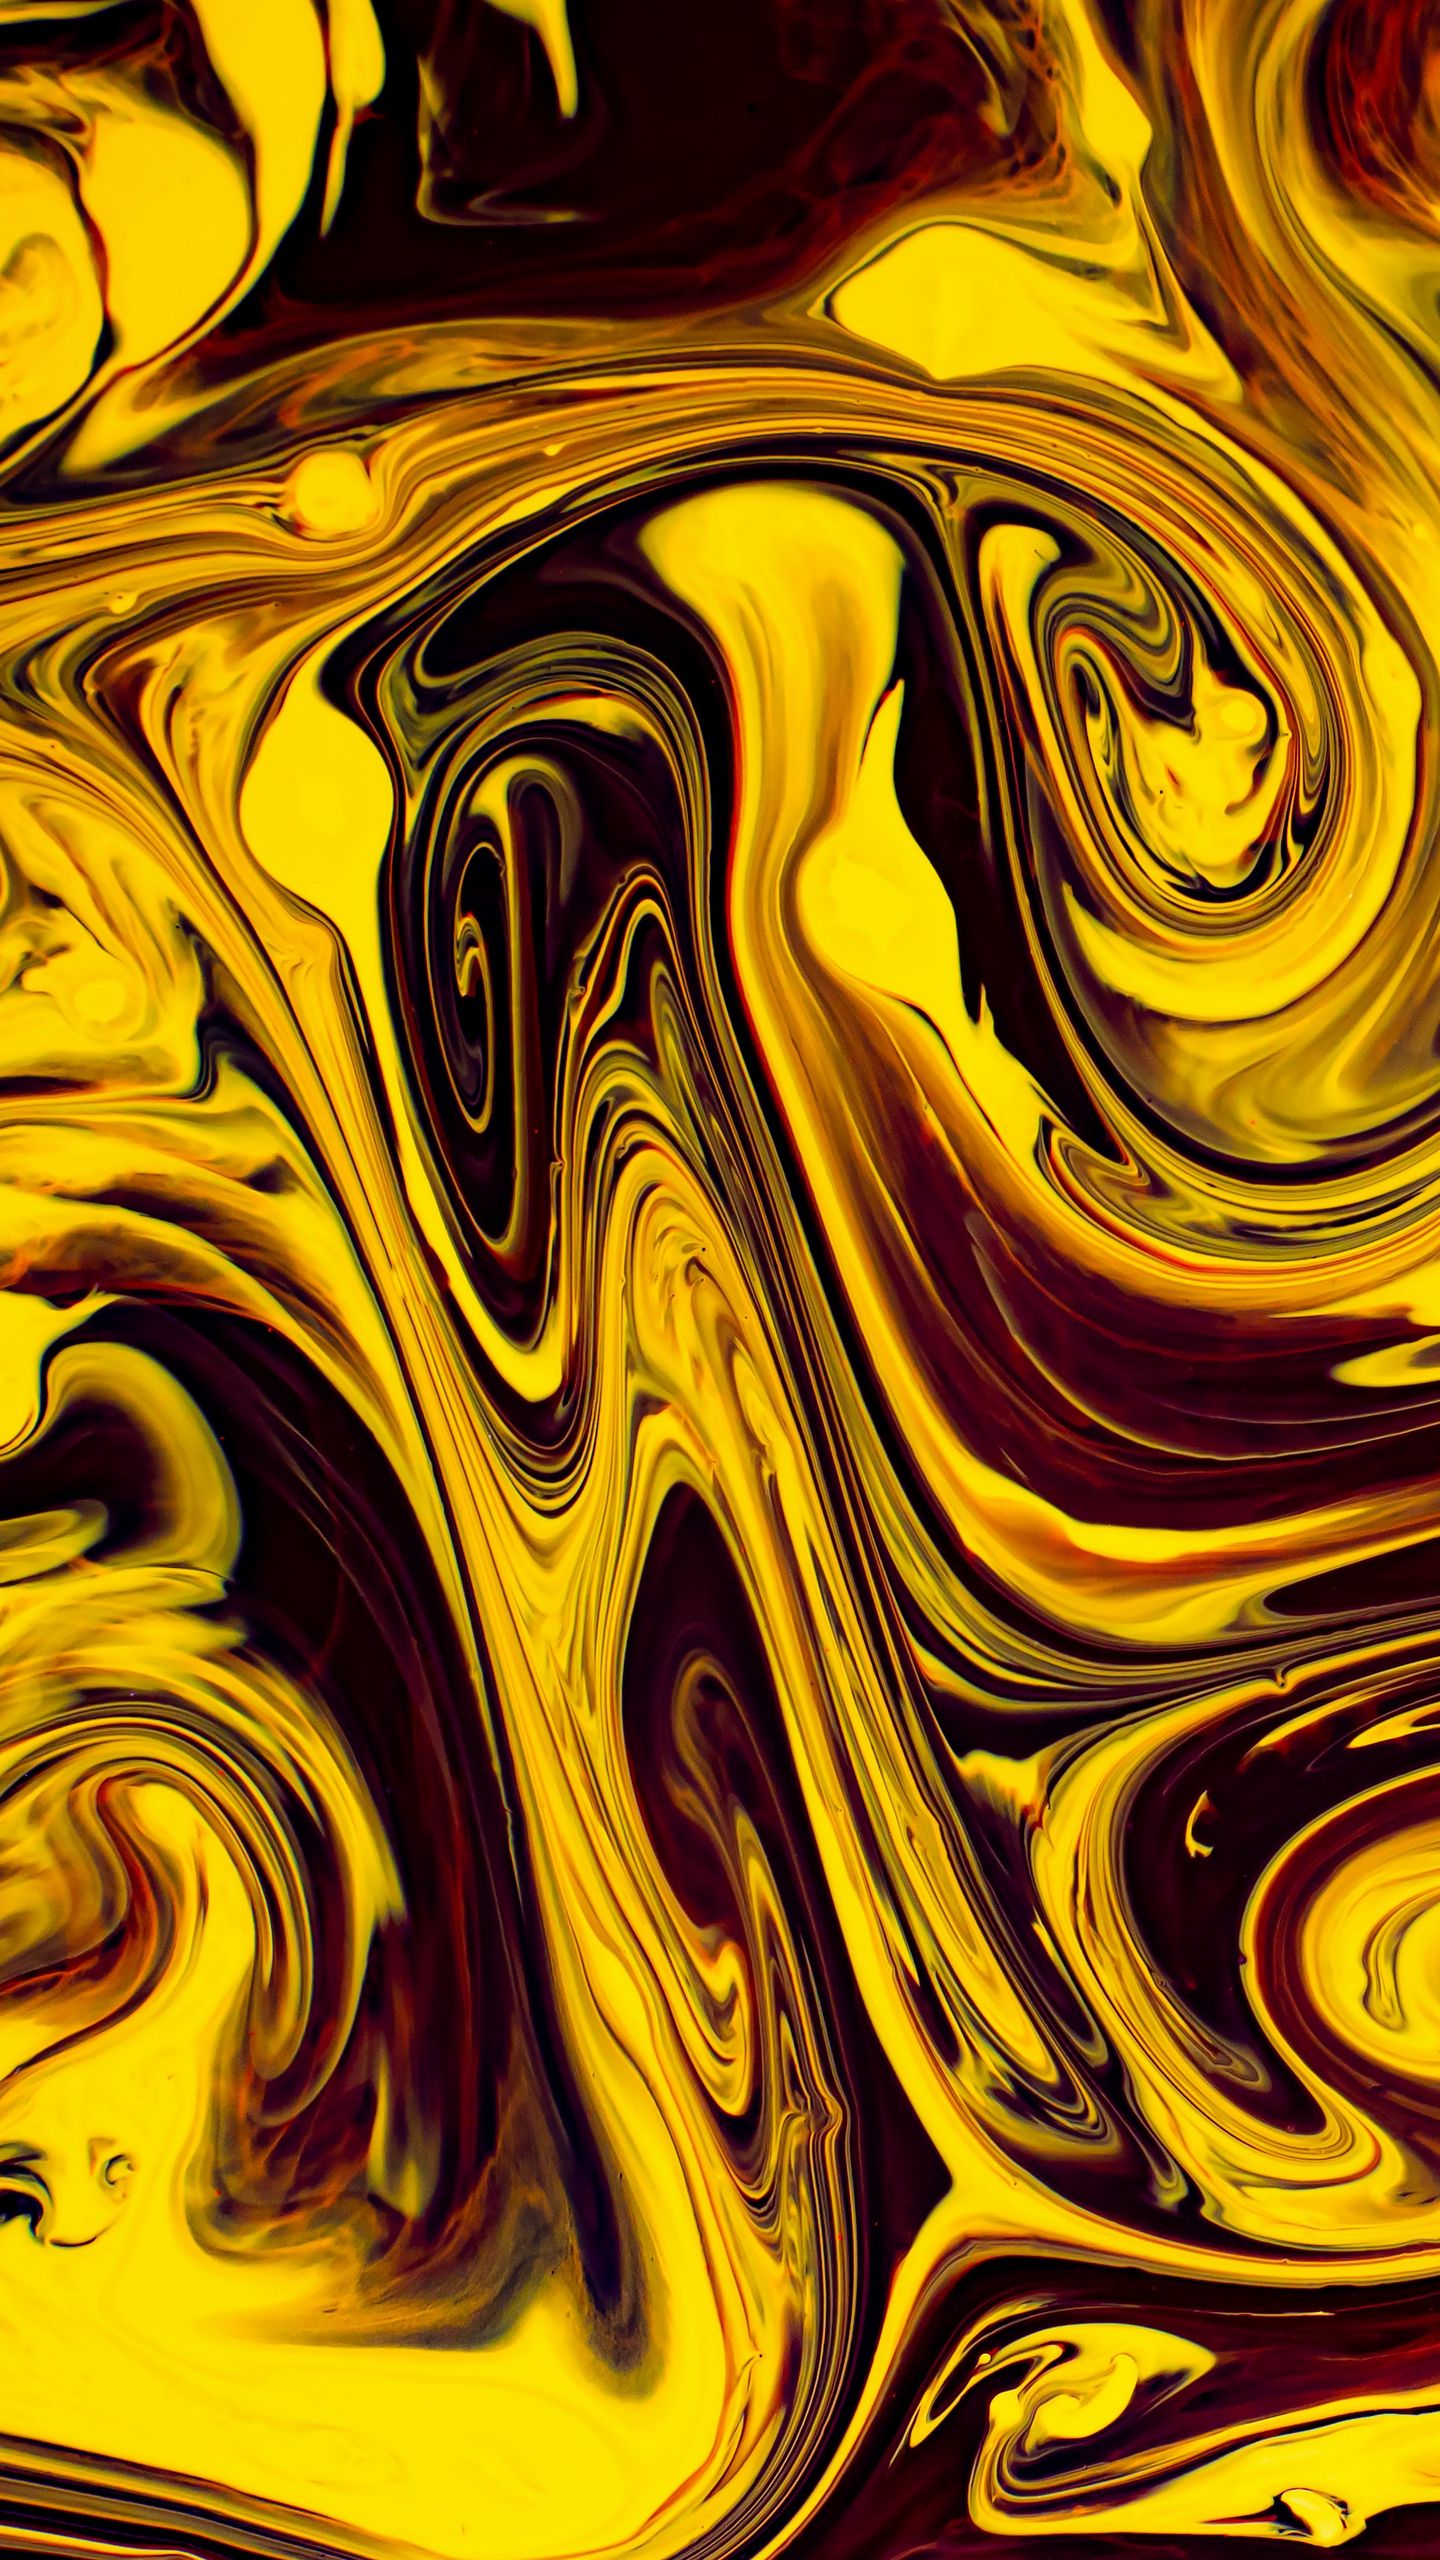 Download wallpaper 1440x2560 paint, liquid, fluid art, stains, distortion,  yellow qhd samsung galaxy s6, s7, edge, note, lg g4 hd background